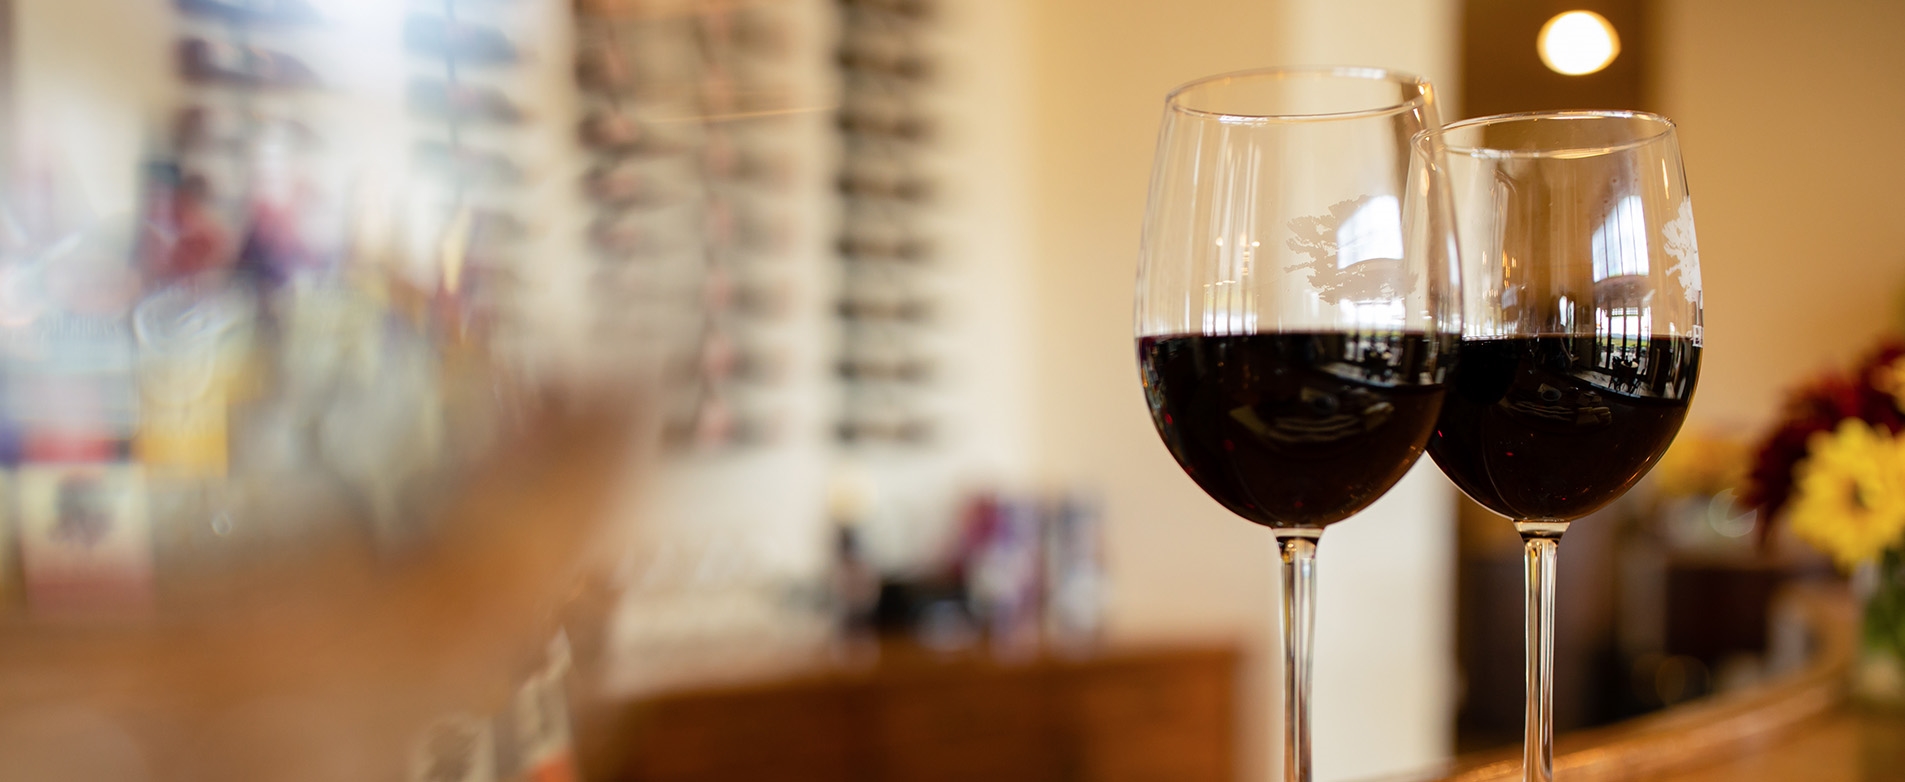 Glasses of wine on bar